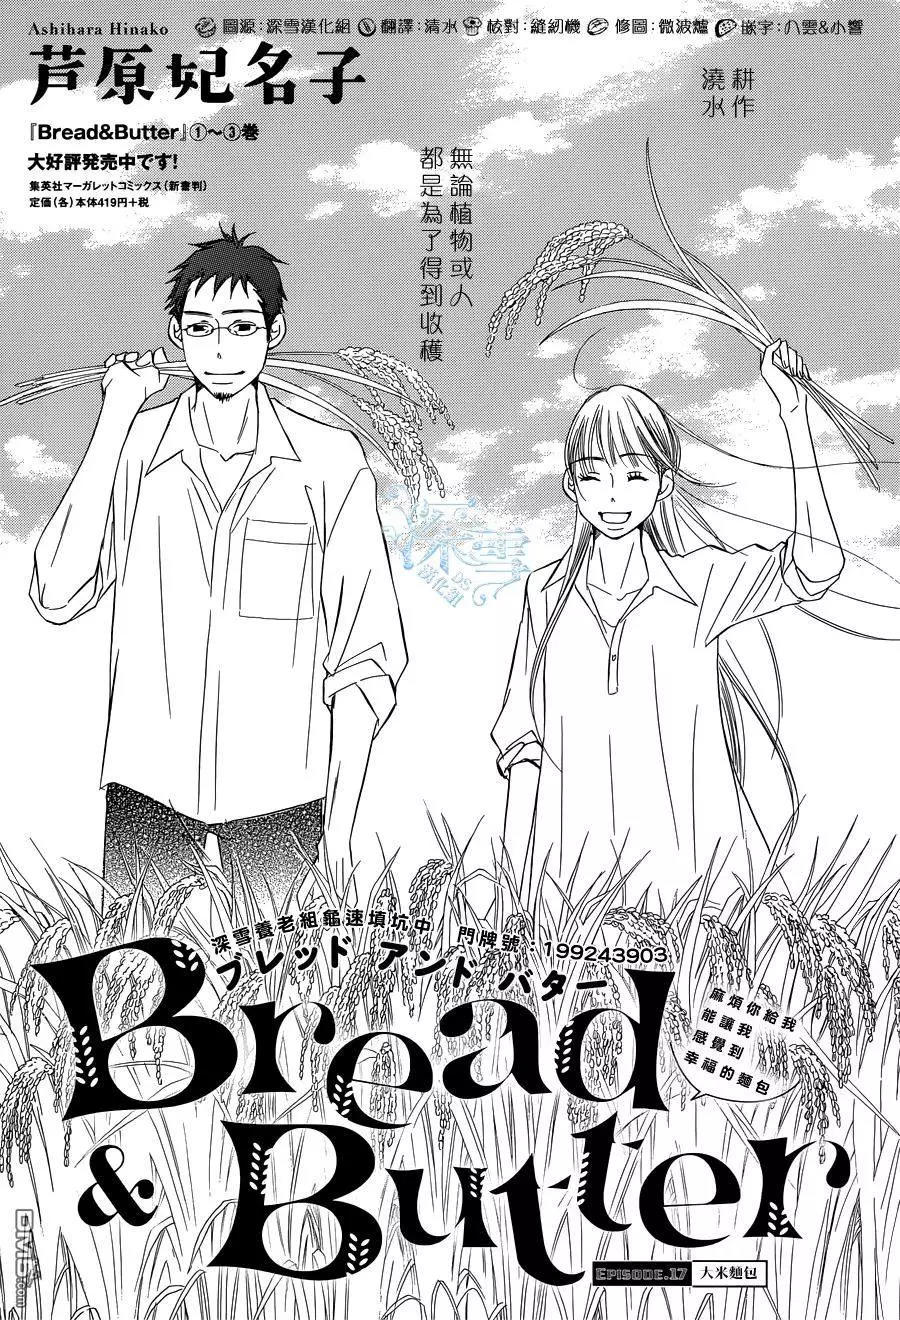 Bread Butter漫画单行本第17回大米面包 漫画db